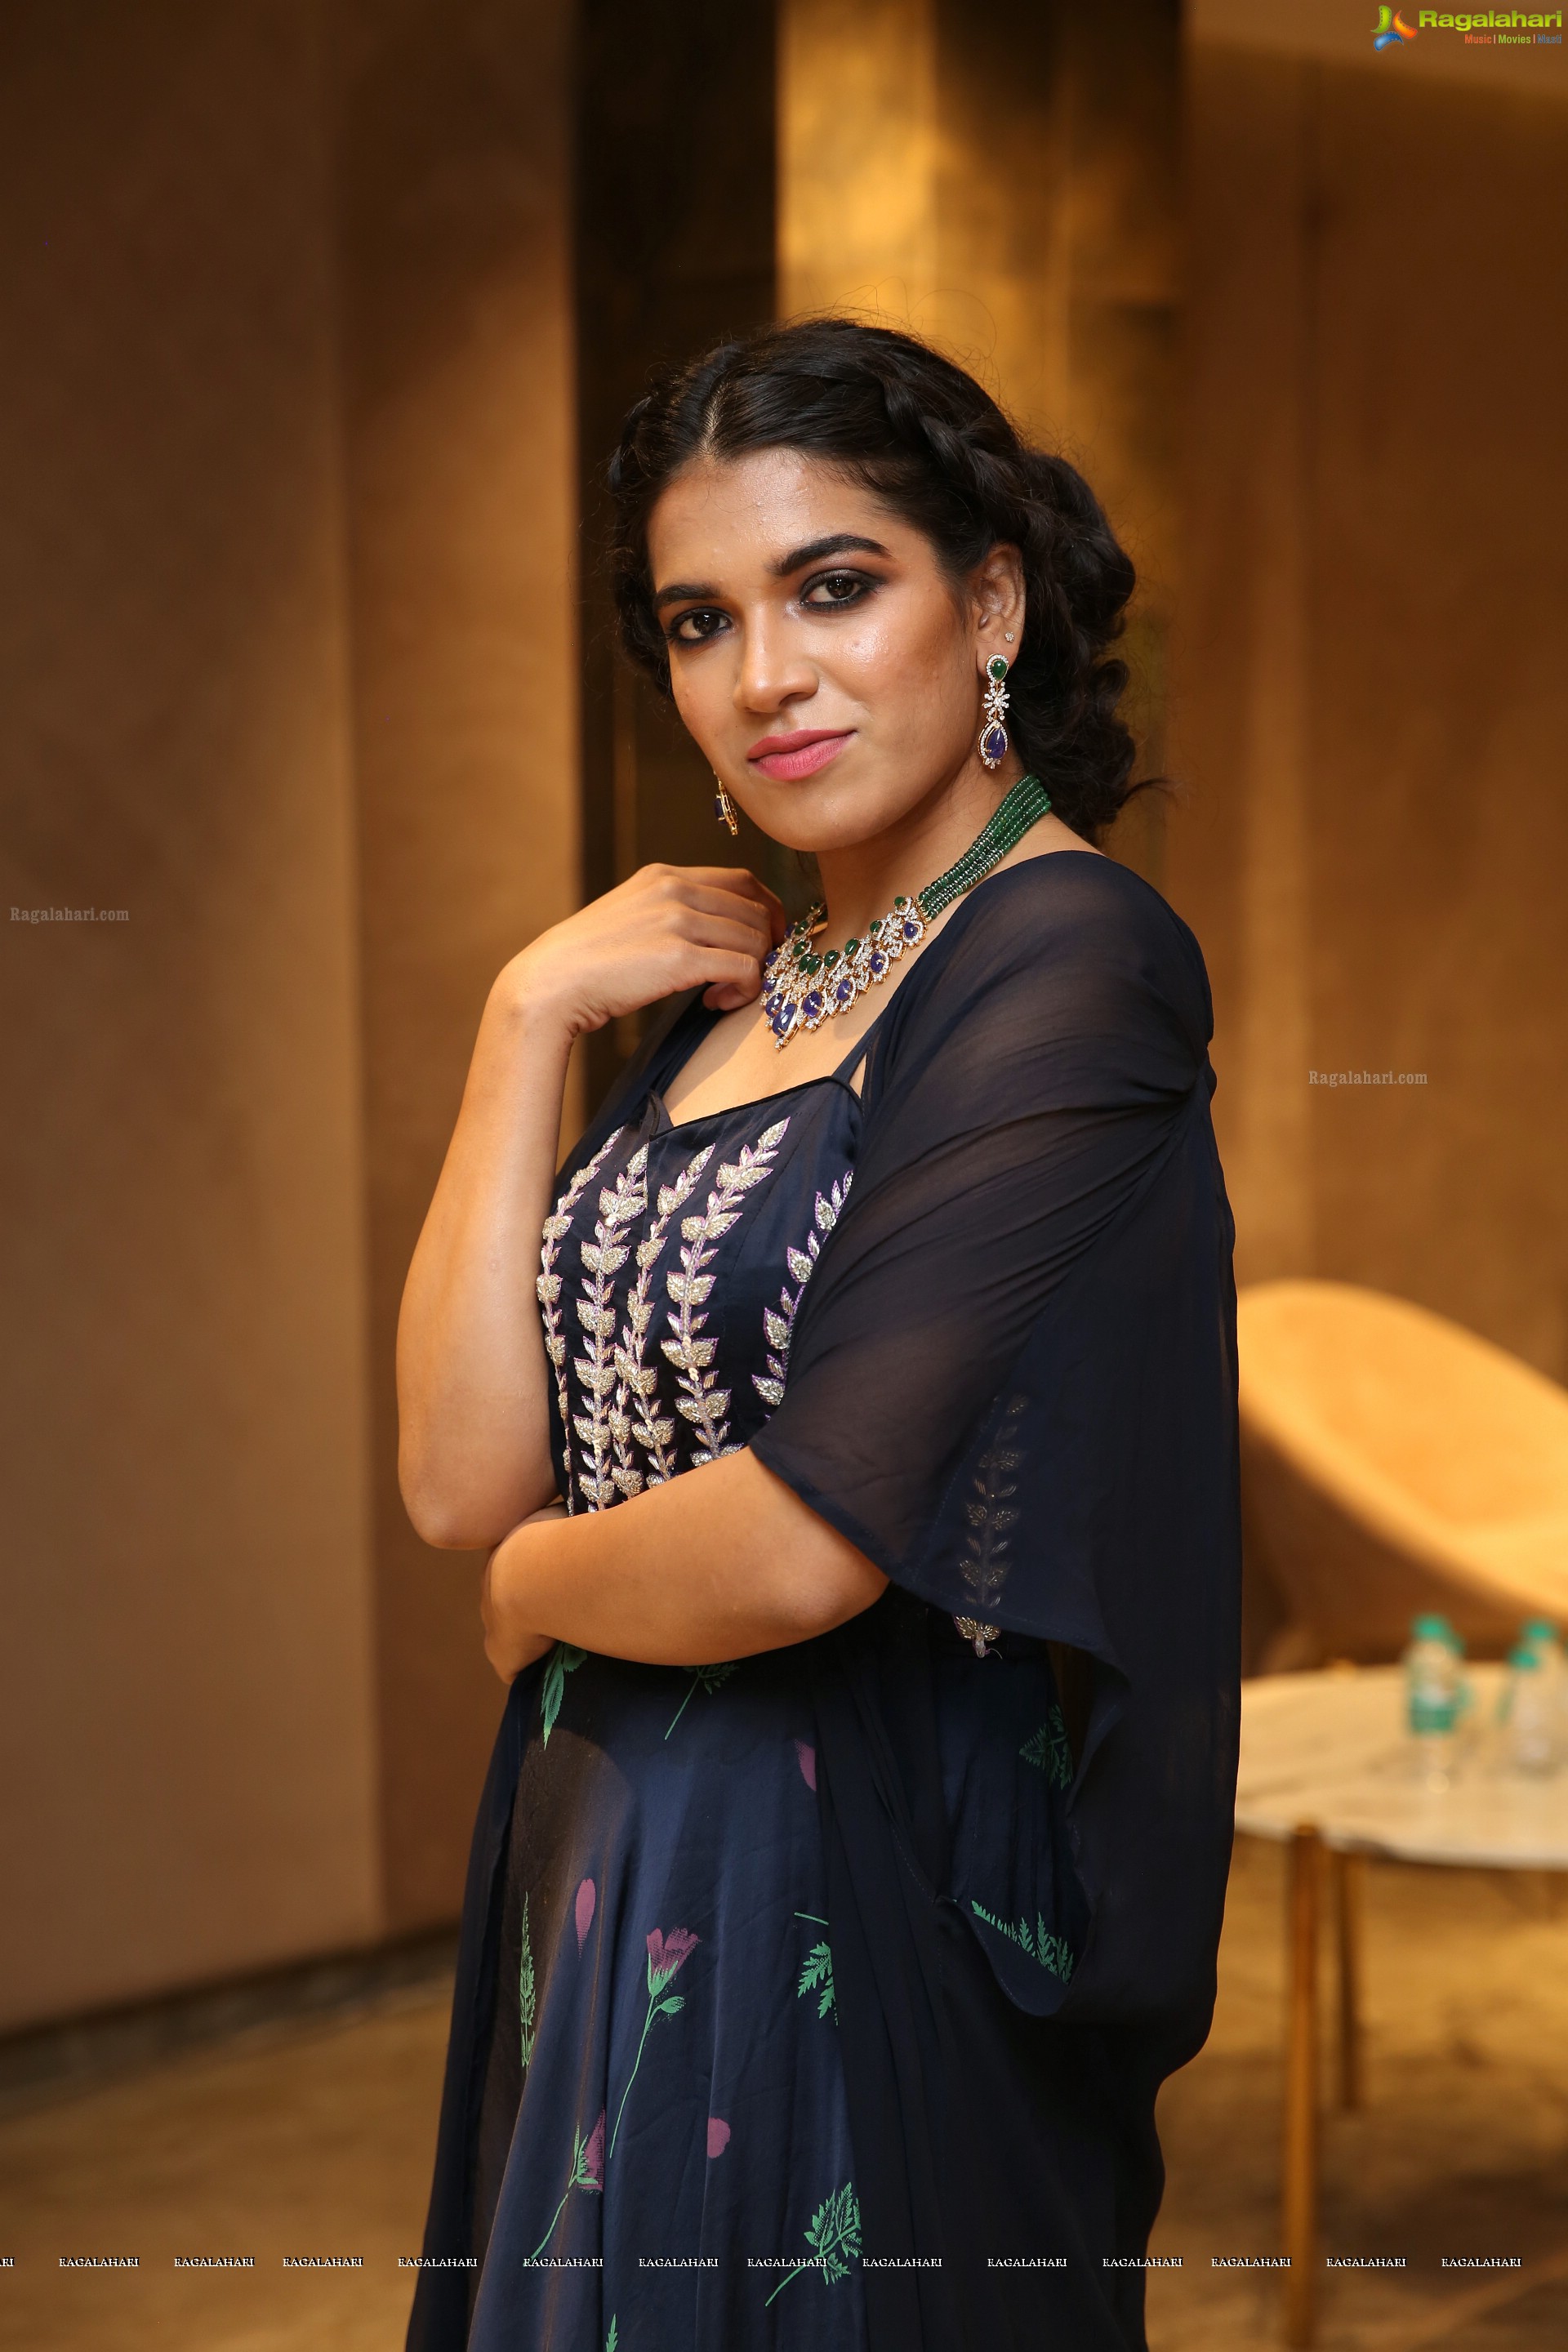 Megha Yadav (High definition) @ Nikitha Jewellery - The 9 Shades of Women